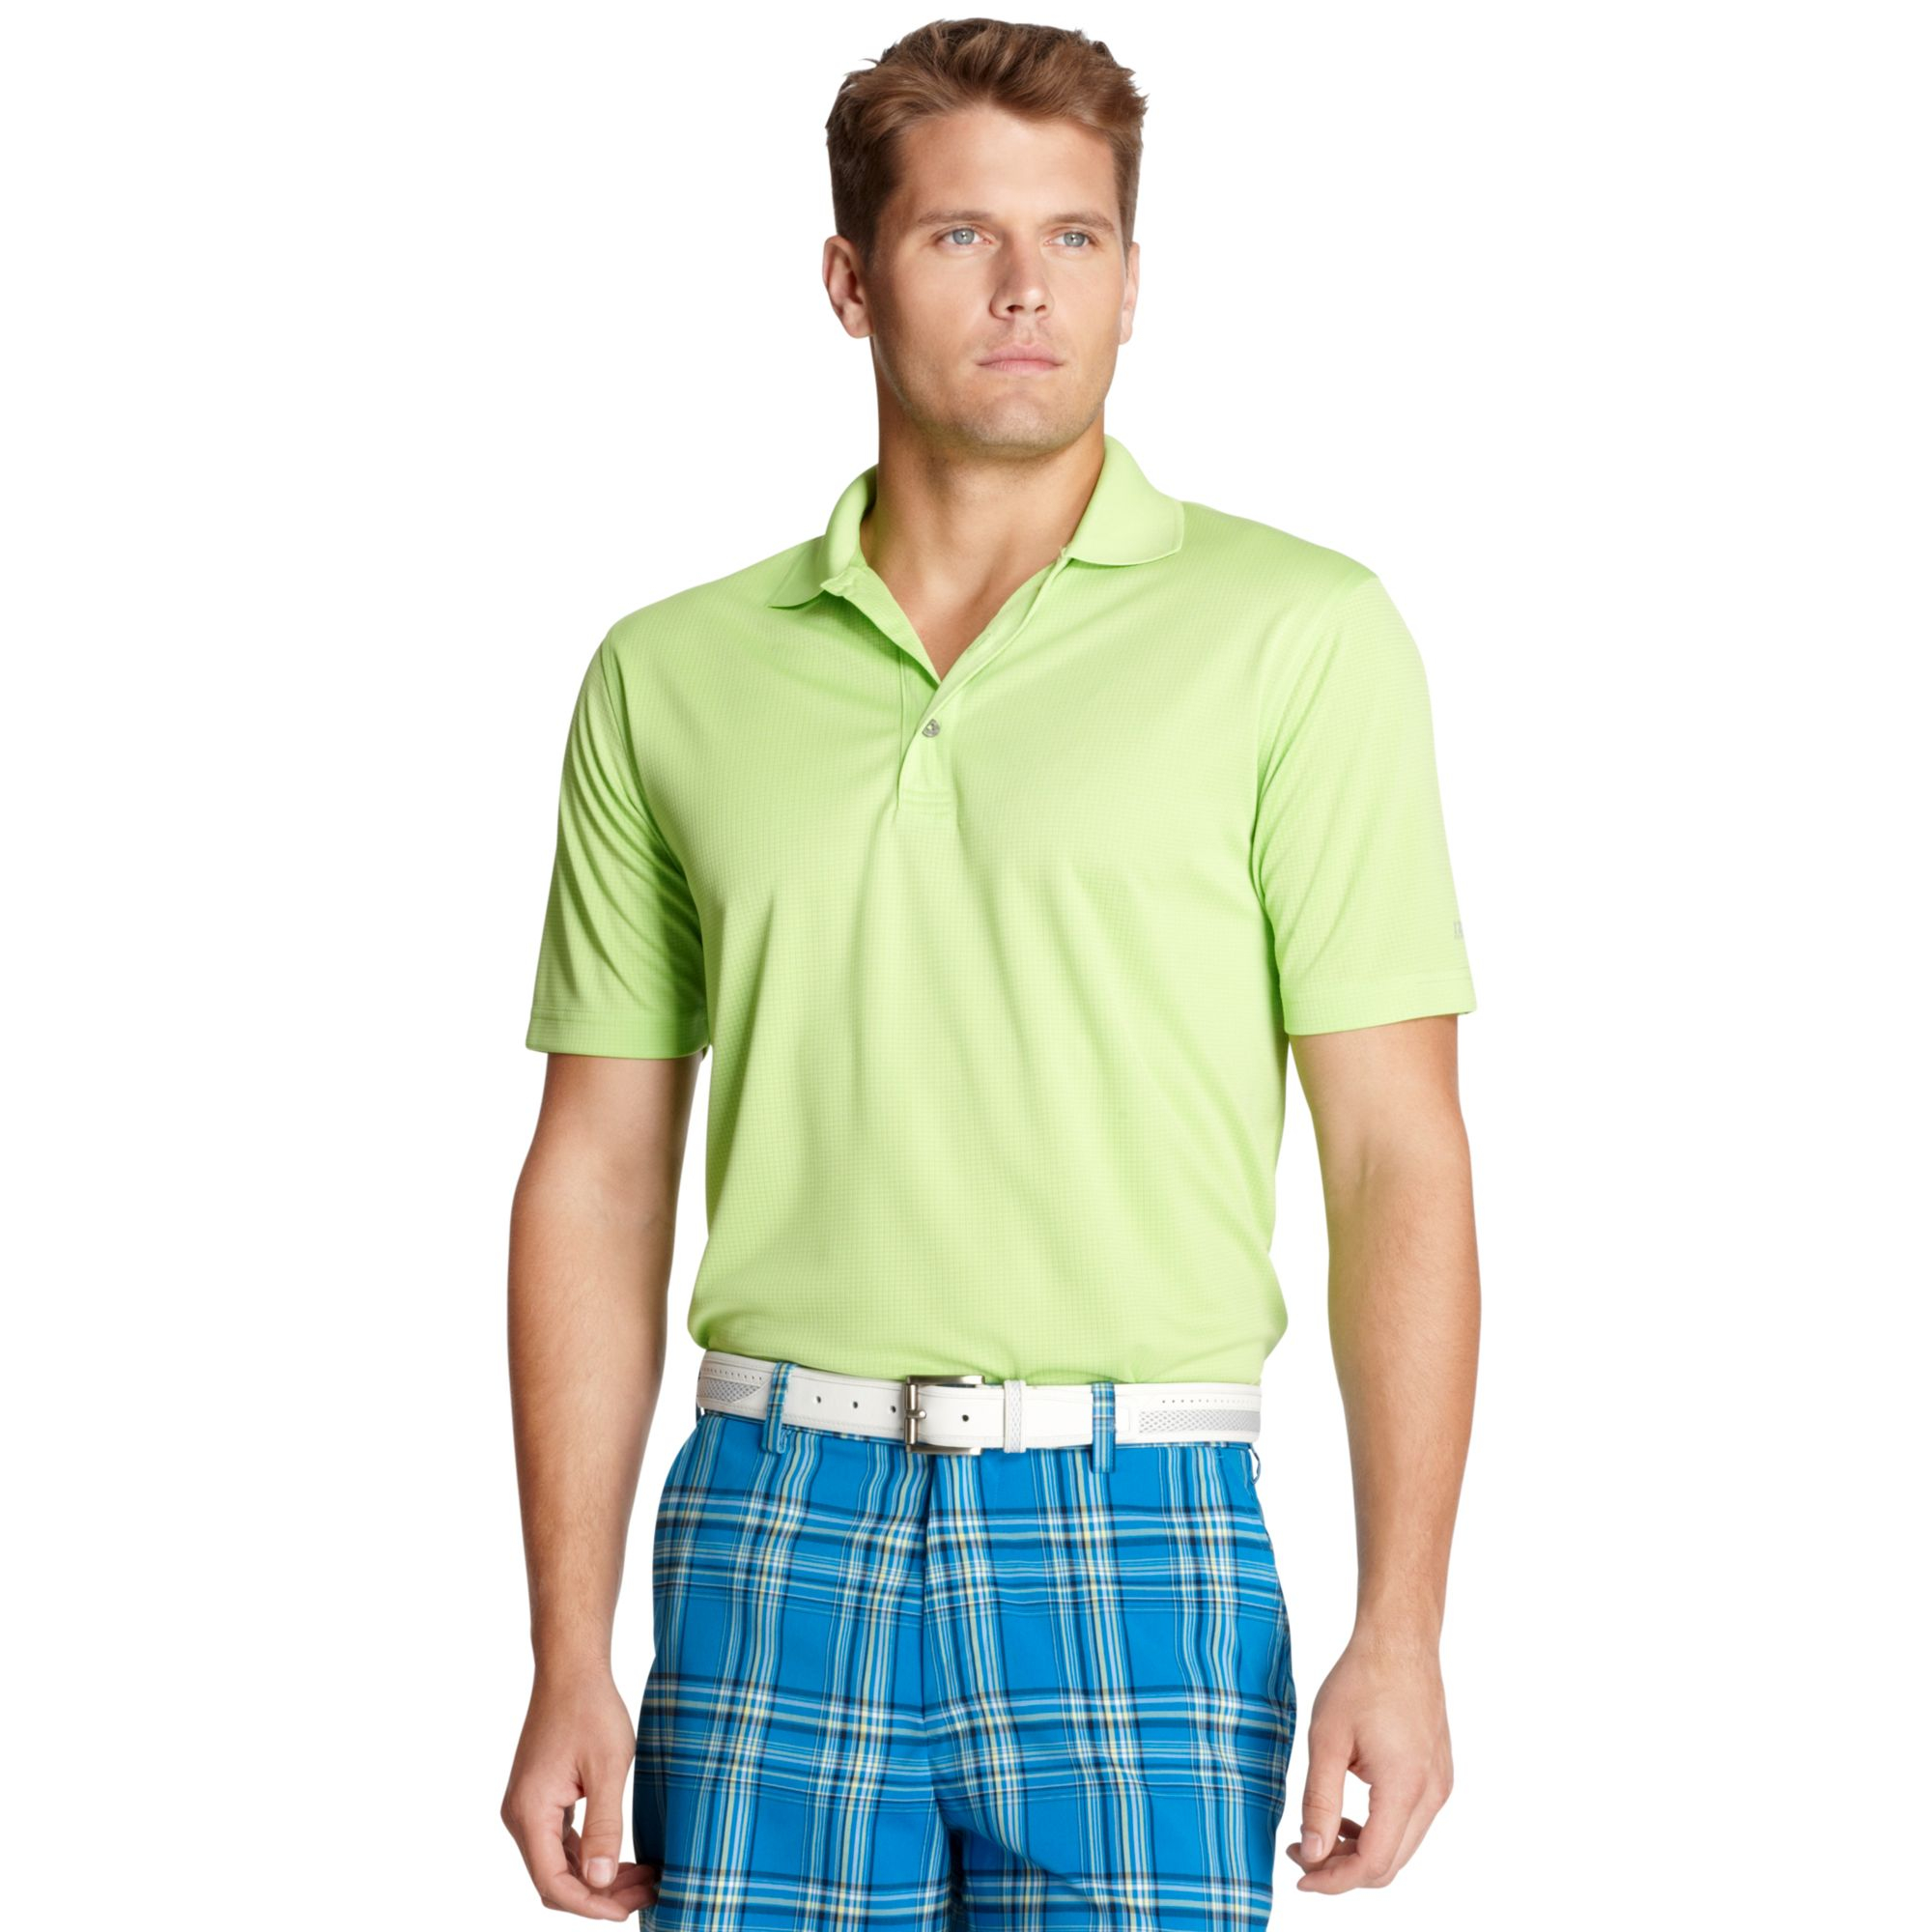 Lyst - Izod Golf Shirt Uv Wicking Performance Solid Grid Polo Shirt in ...